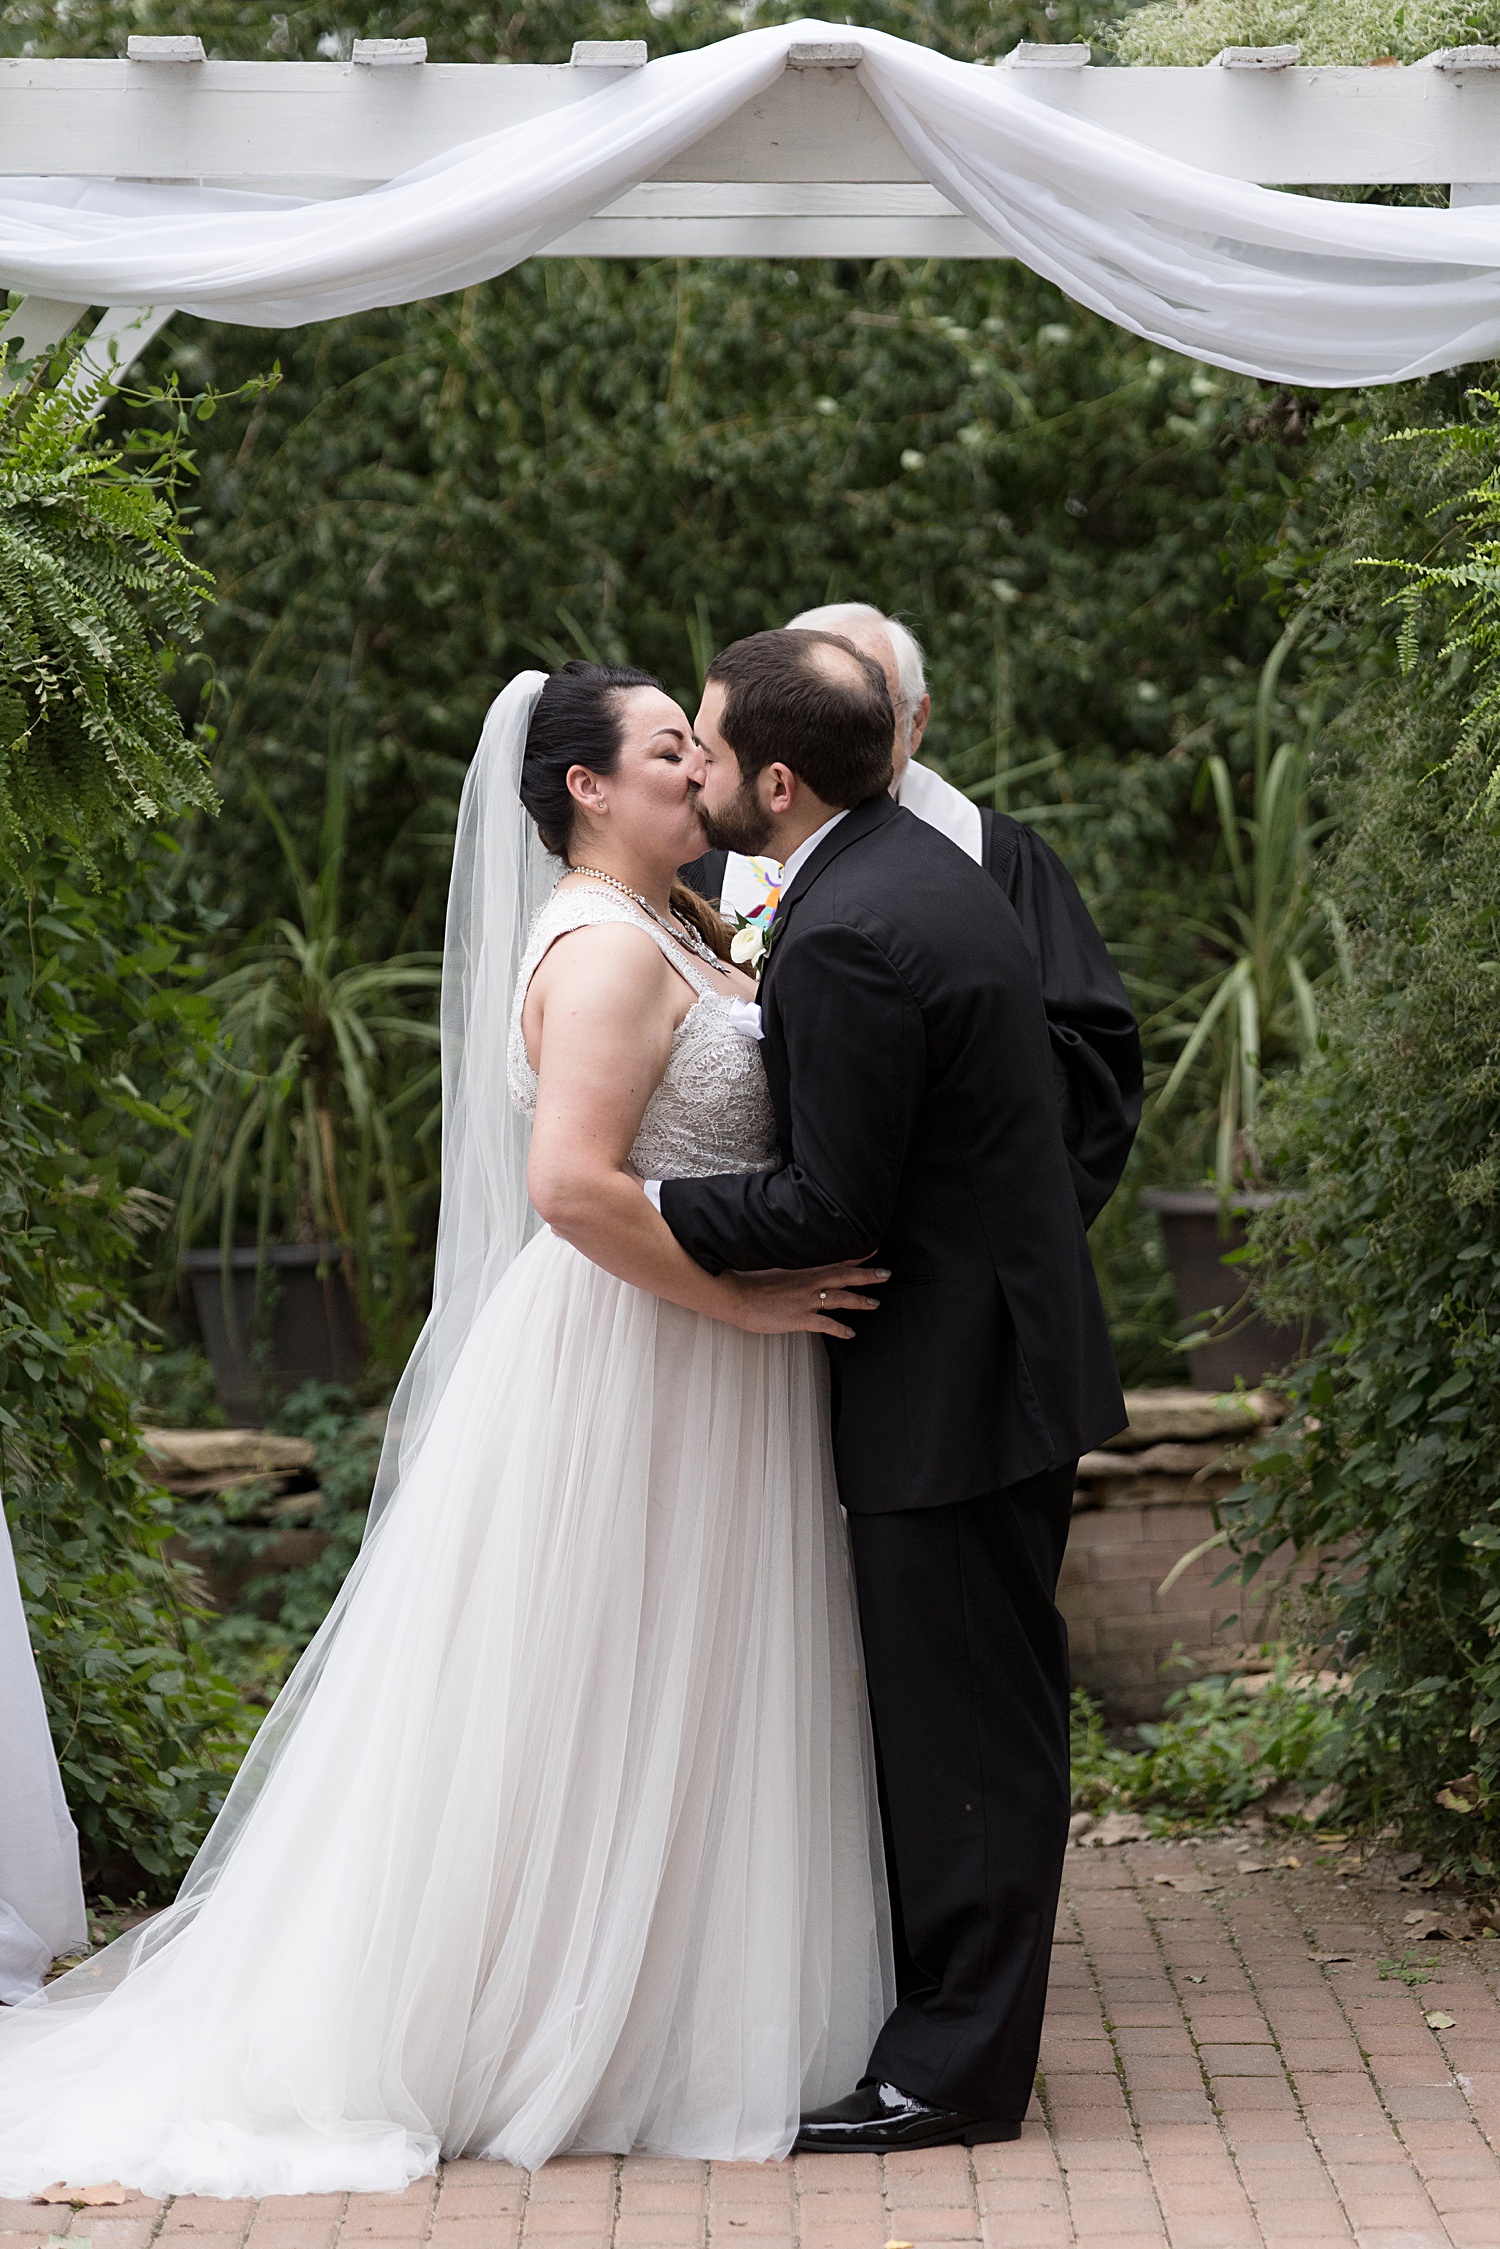 First kiss at garden wedding ceremony. VVI Wedding - Victoria Veranda Country Inn Wedding Photos- Lawrence, KS-Wedding-Photographer-Emily-Lynn-Photography